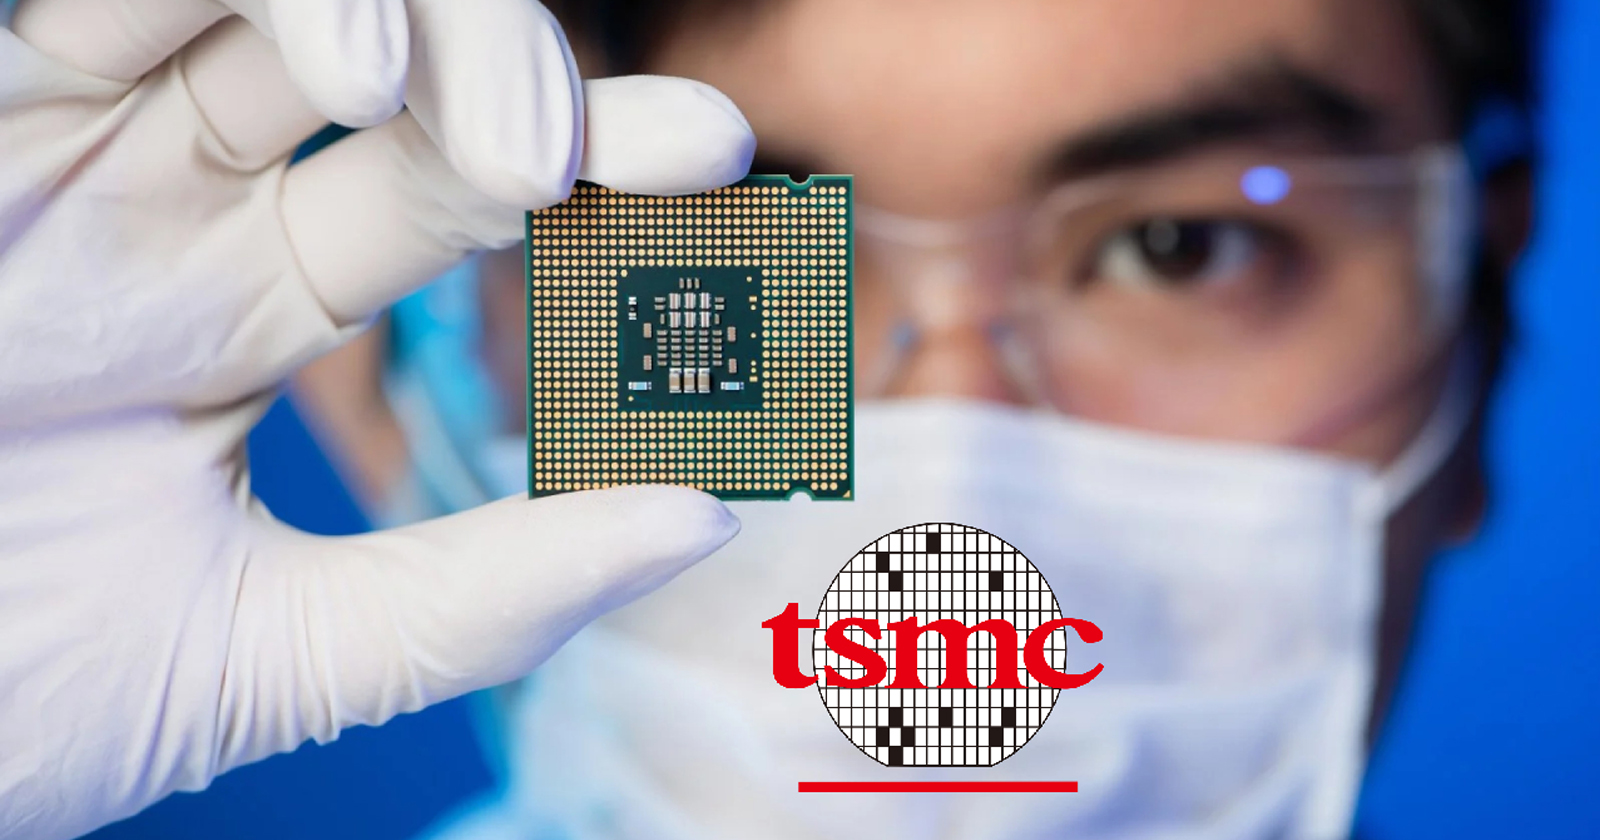 TSMC works on 1.4 nanometer processors!